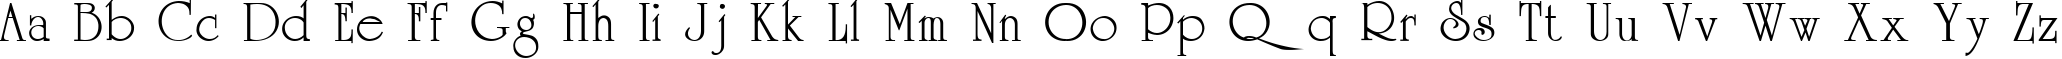 Пример написания английского алфавита шрифтом UniversityC